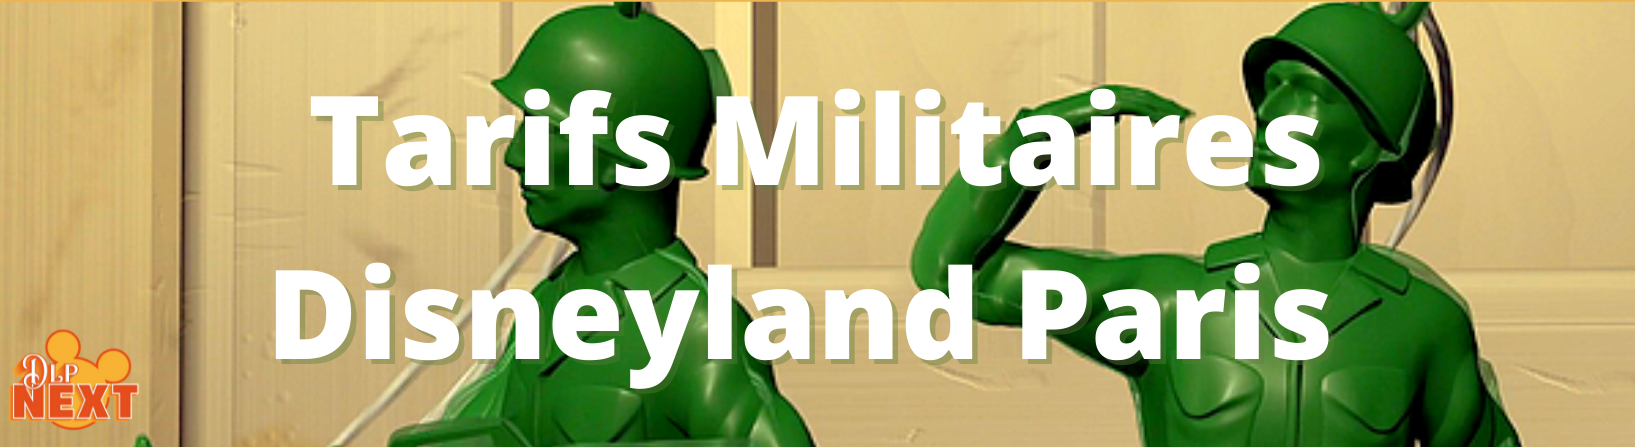 Offre tarif militaire Disneyland paris